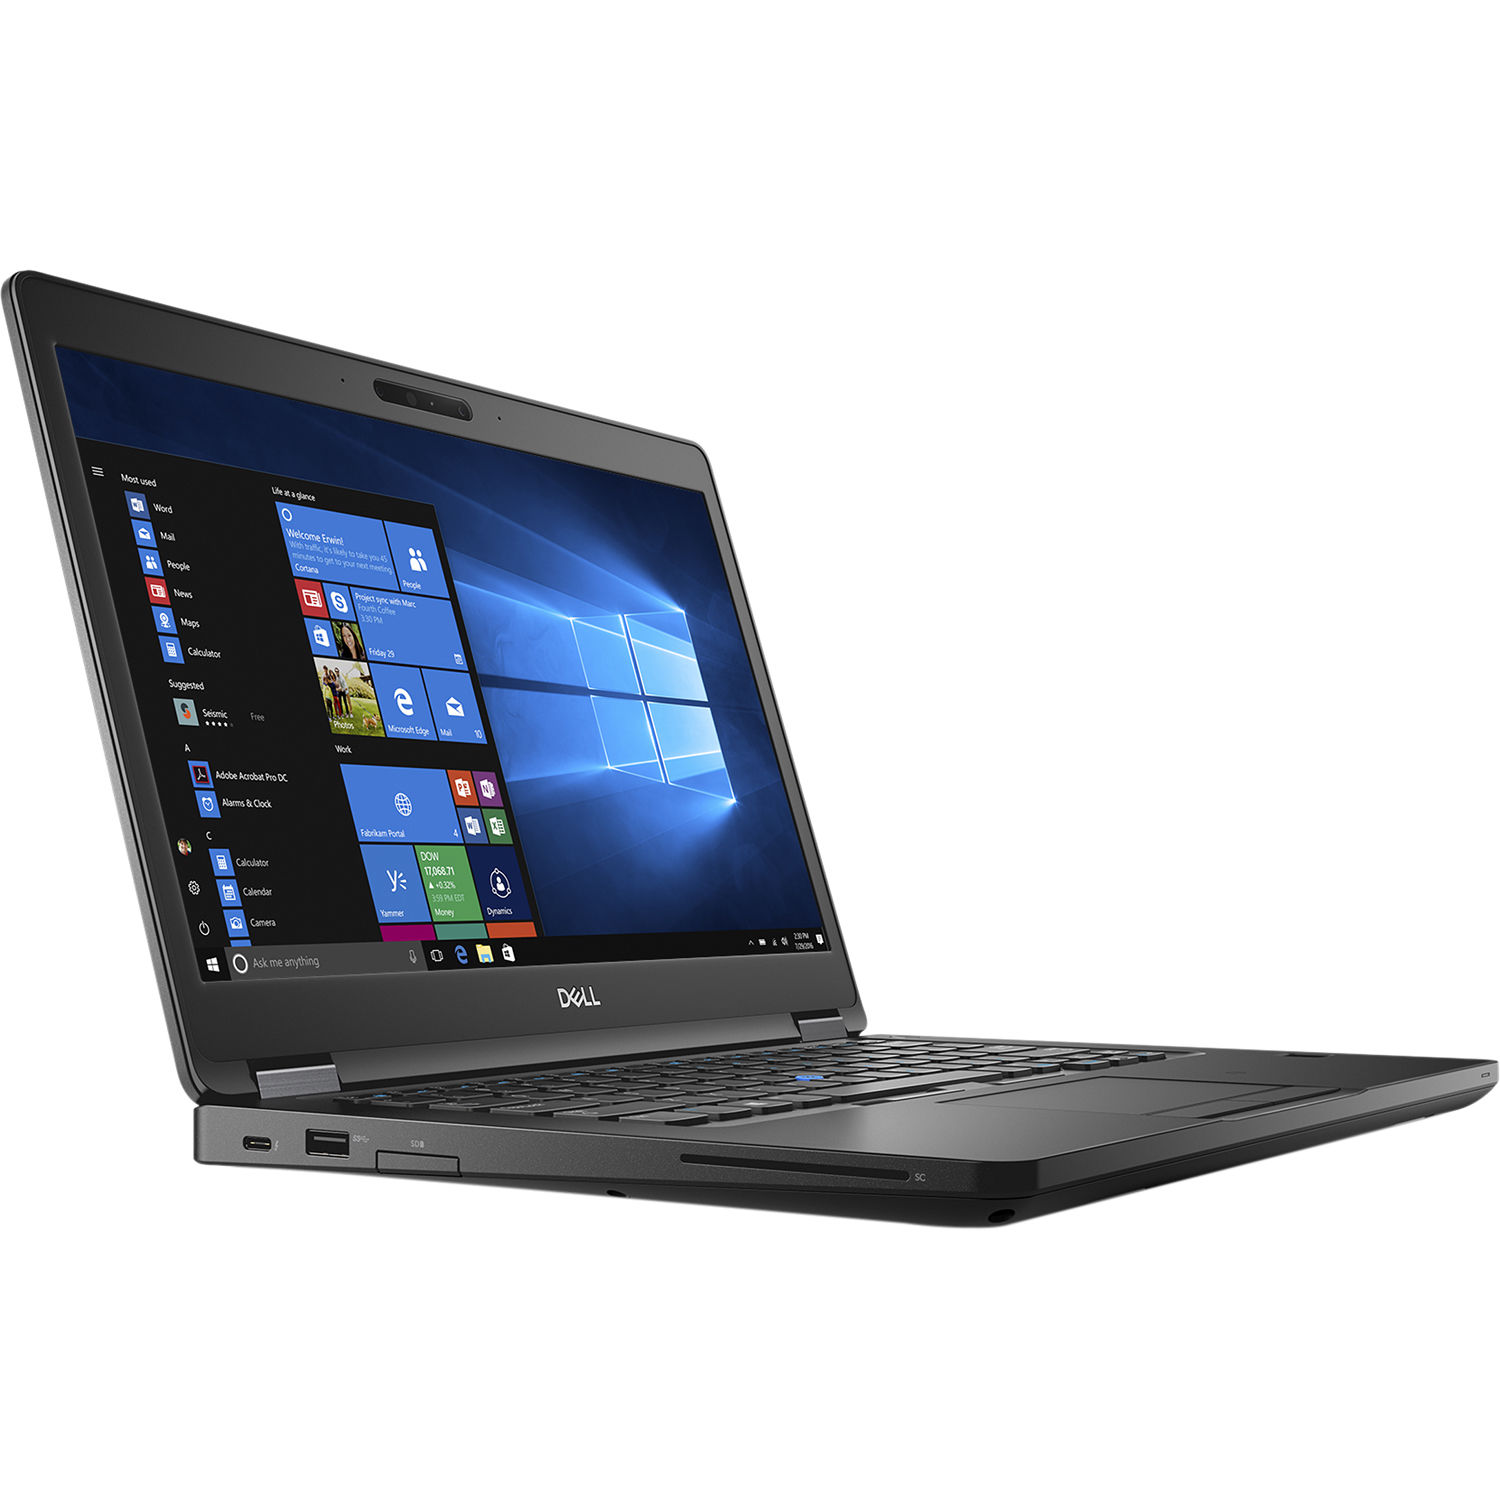 Laptop Chơi Game Giá rẻ Dell Latitude E5490 i5 8350U Ram 16GB SSD 256GB